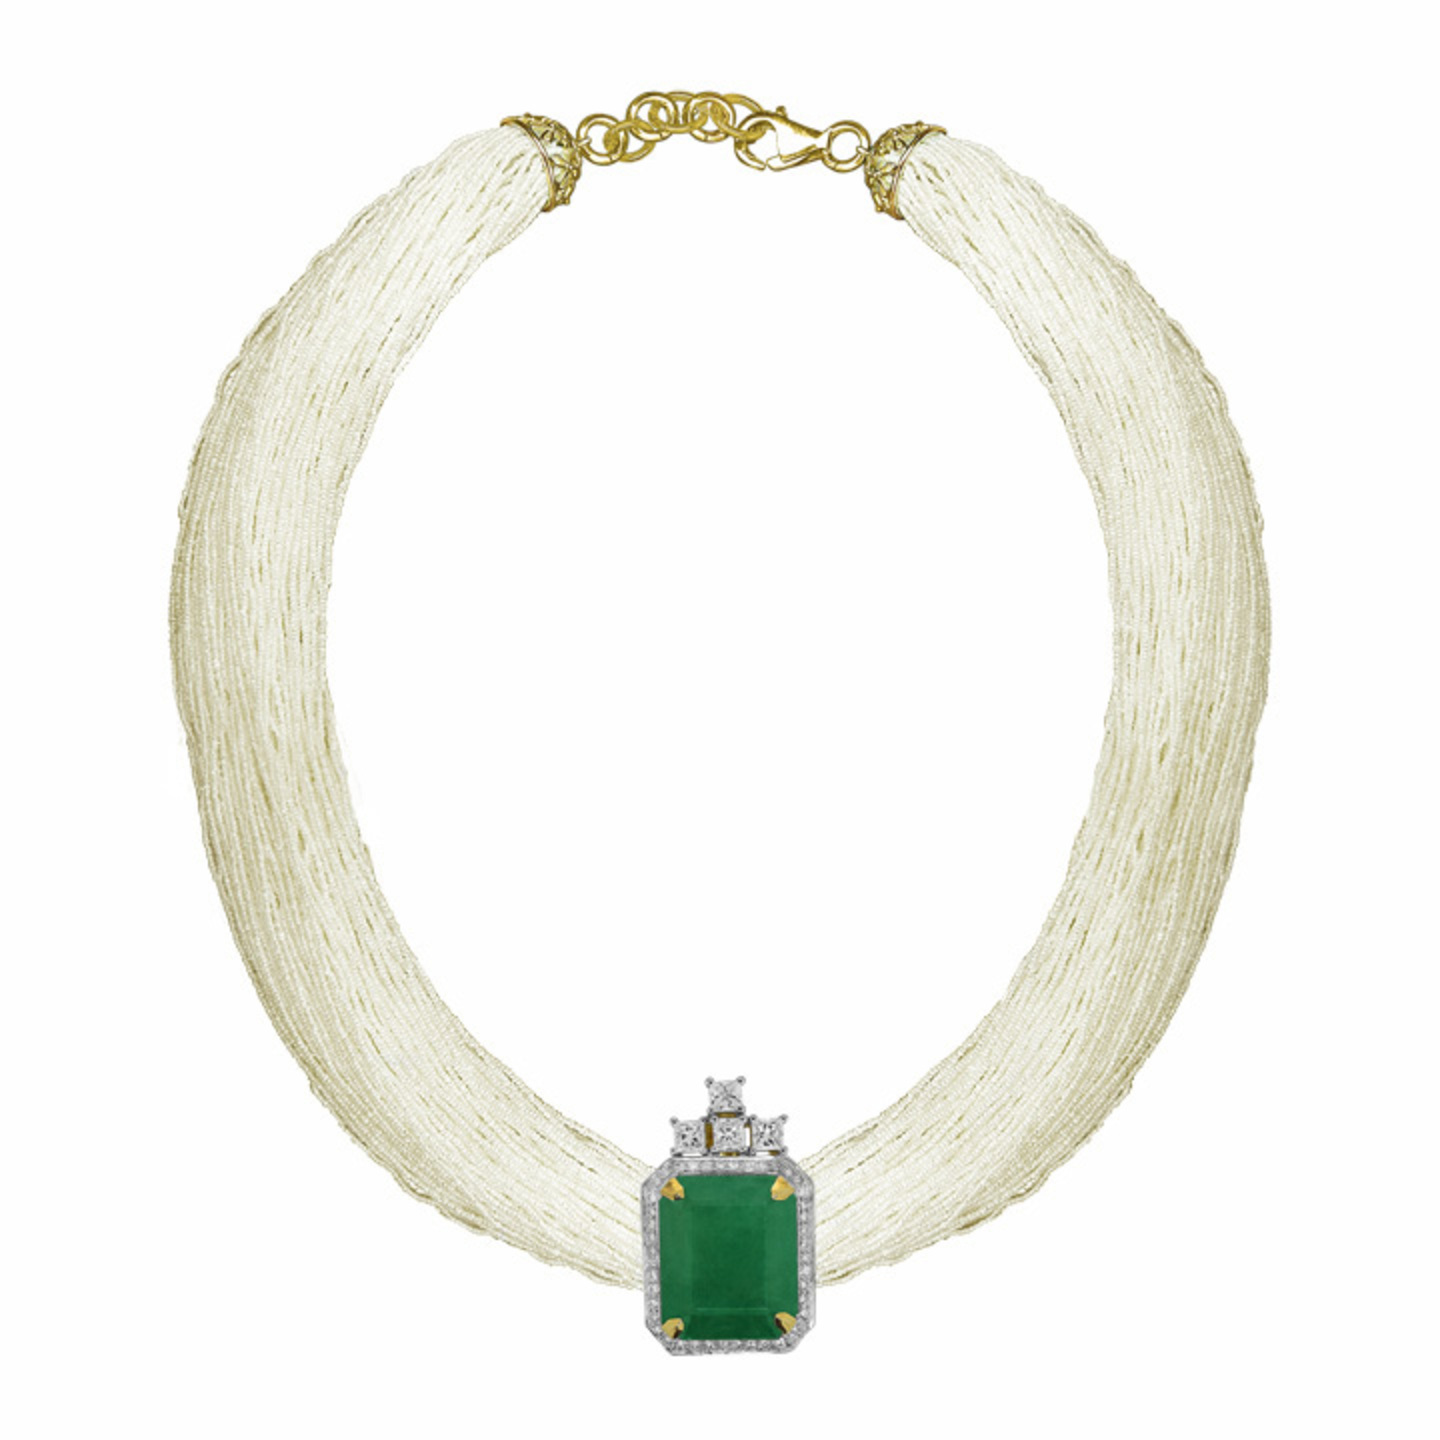 Keshi pearl Princess necklace and removable Emerald diamond pendant